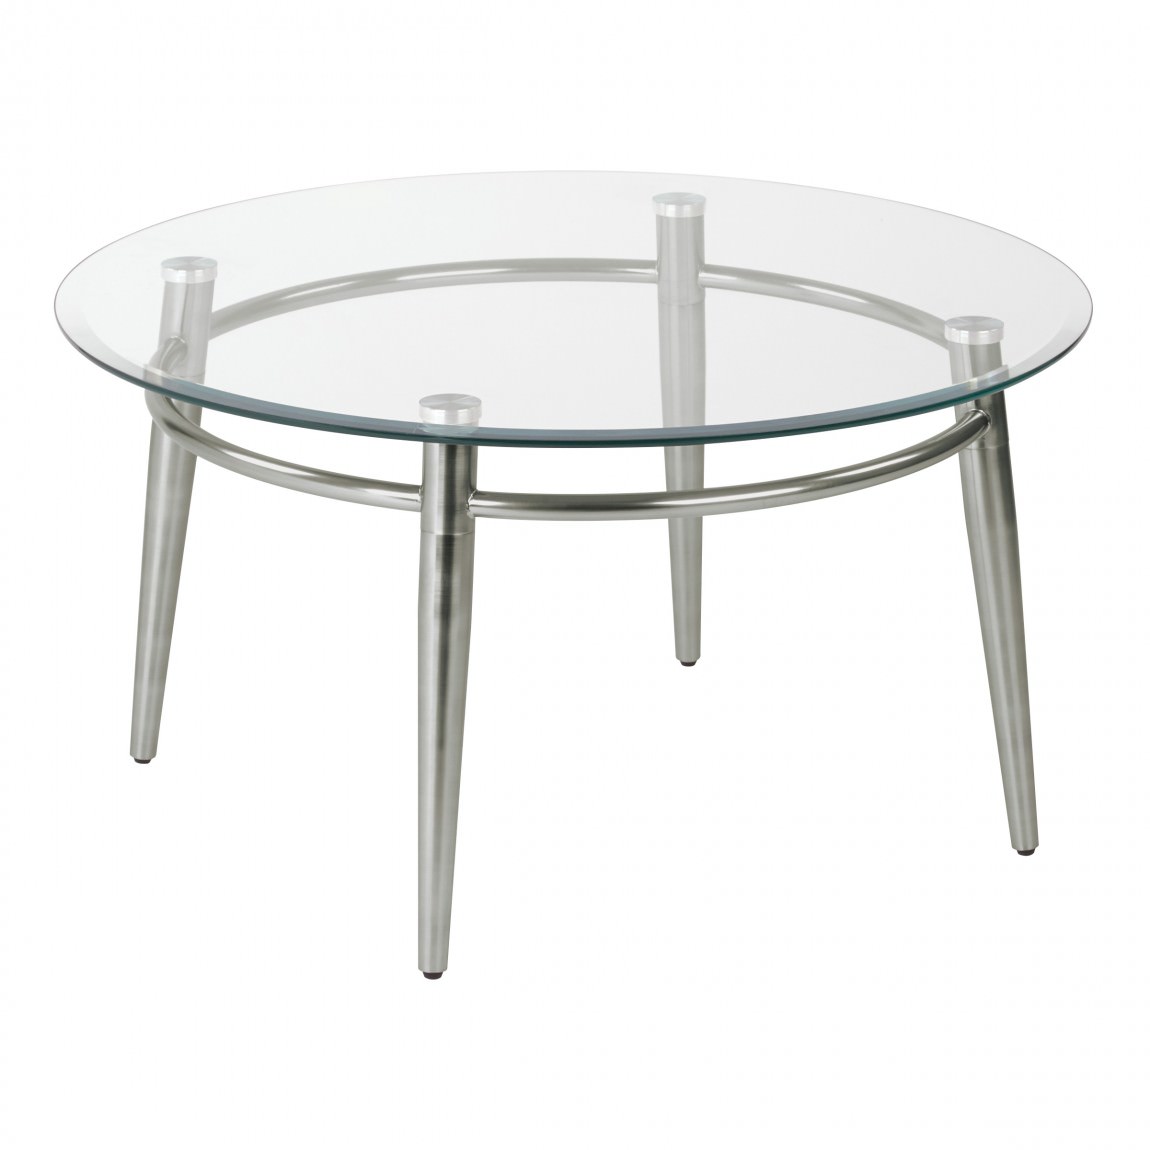 Circular Glass Top Table